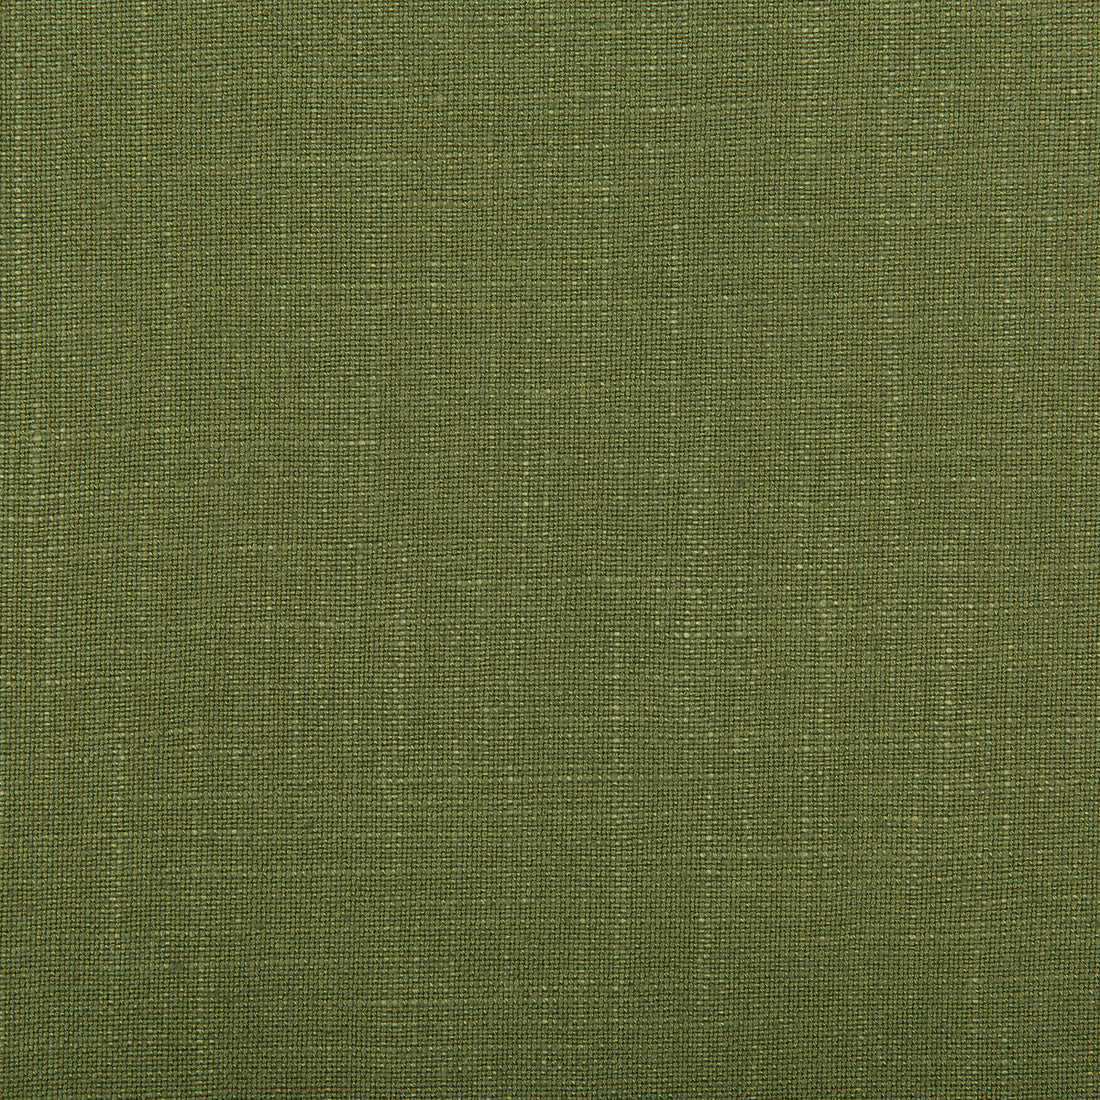 Aura fabric in vine color - pattern 35520.13.0 - by Kravet Design